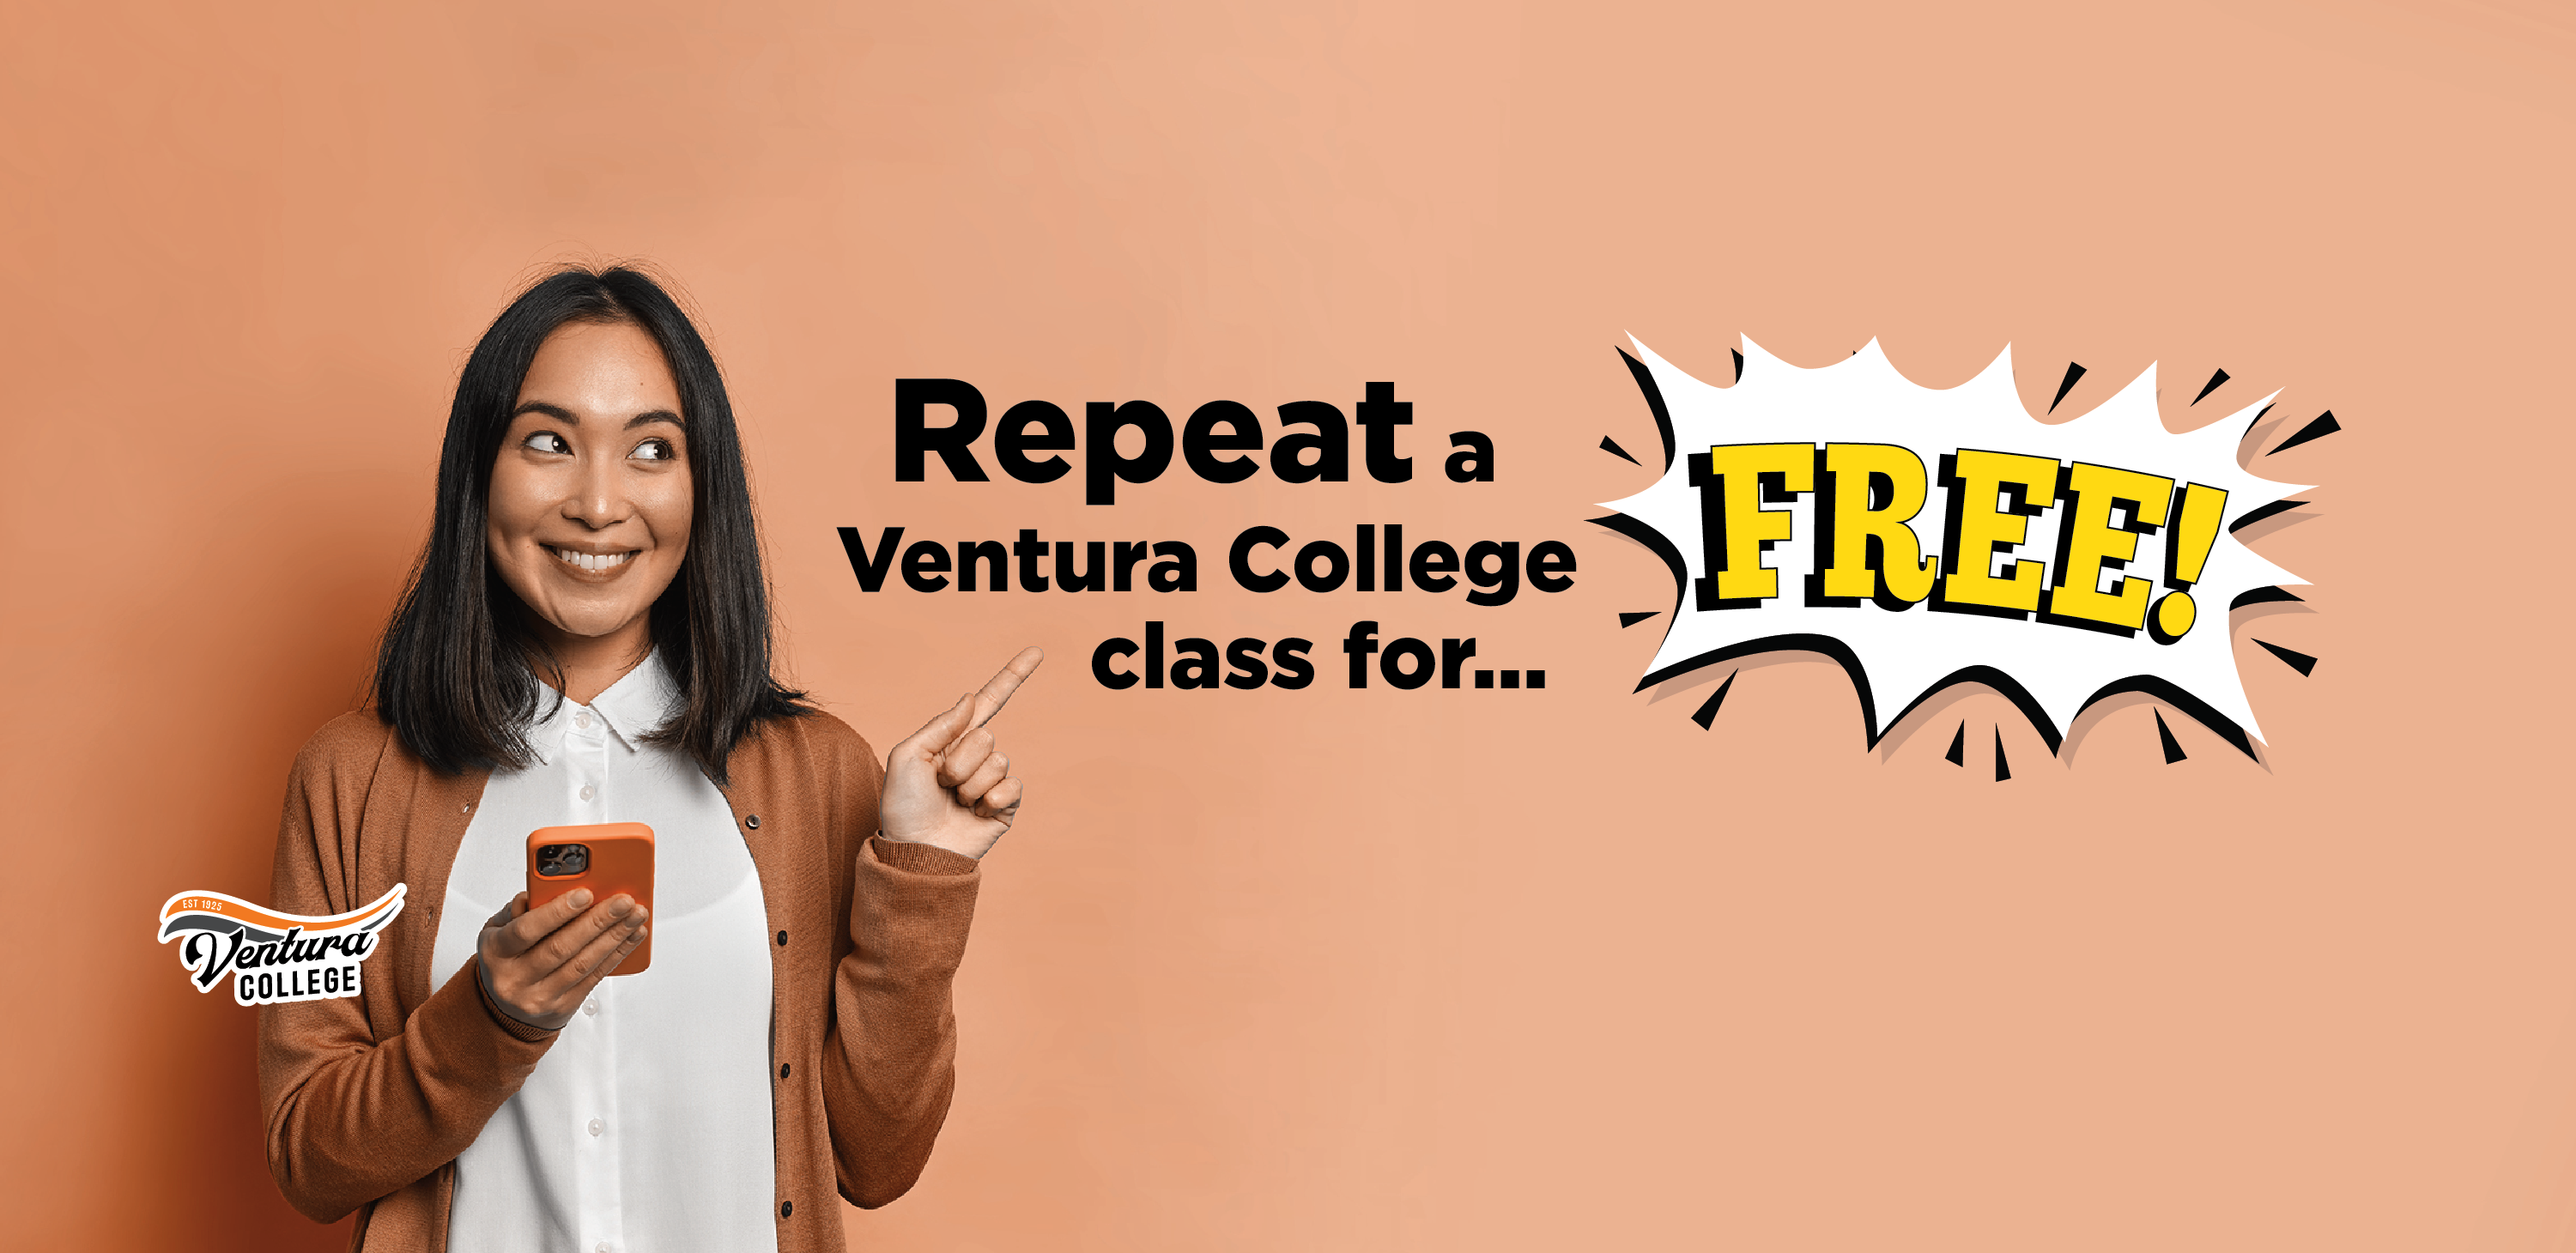 Repeat a Ventura College class for...FREE!